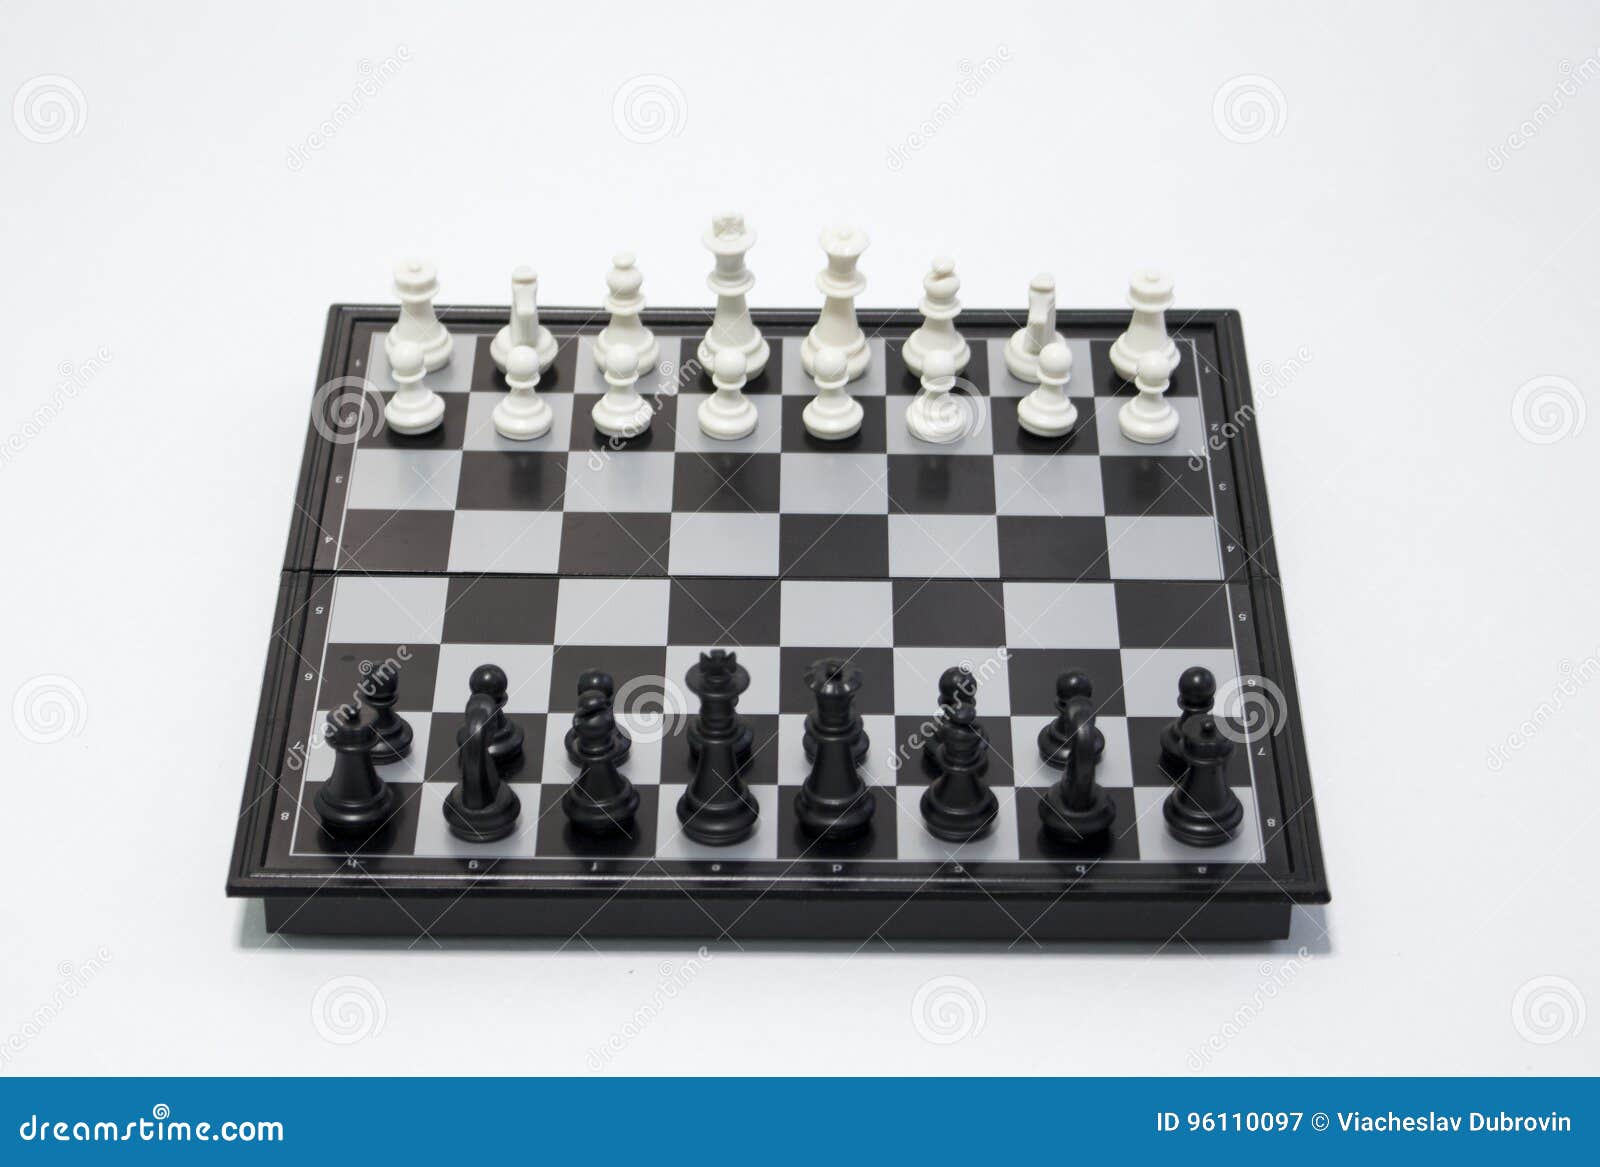 Tabela de luxo xadrez figuras profissionais jogos de tabuleiro